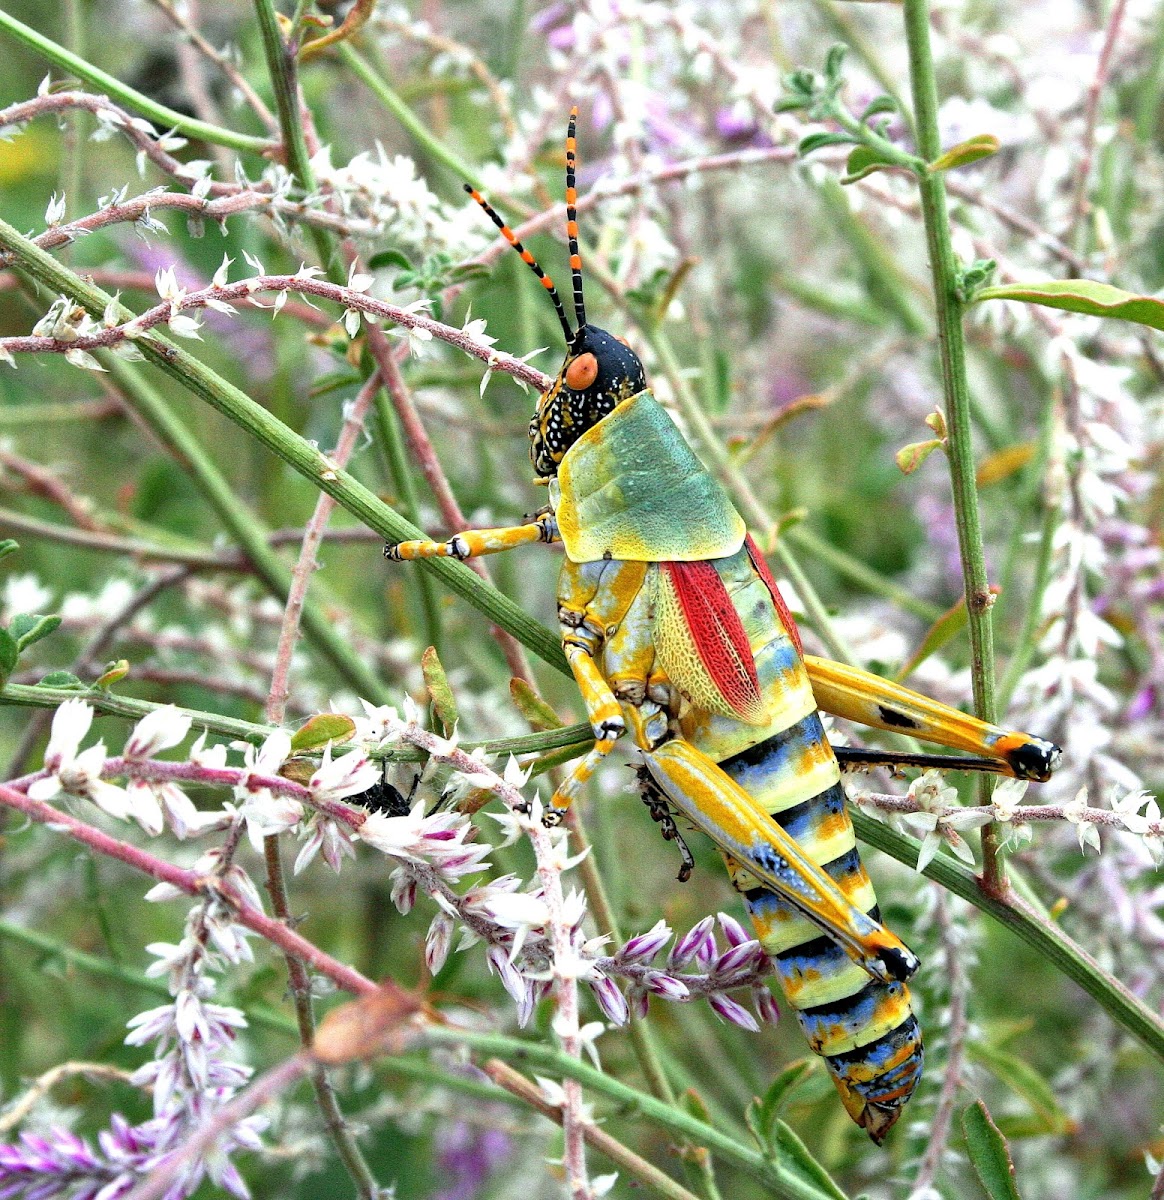 Elegant grasshopper